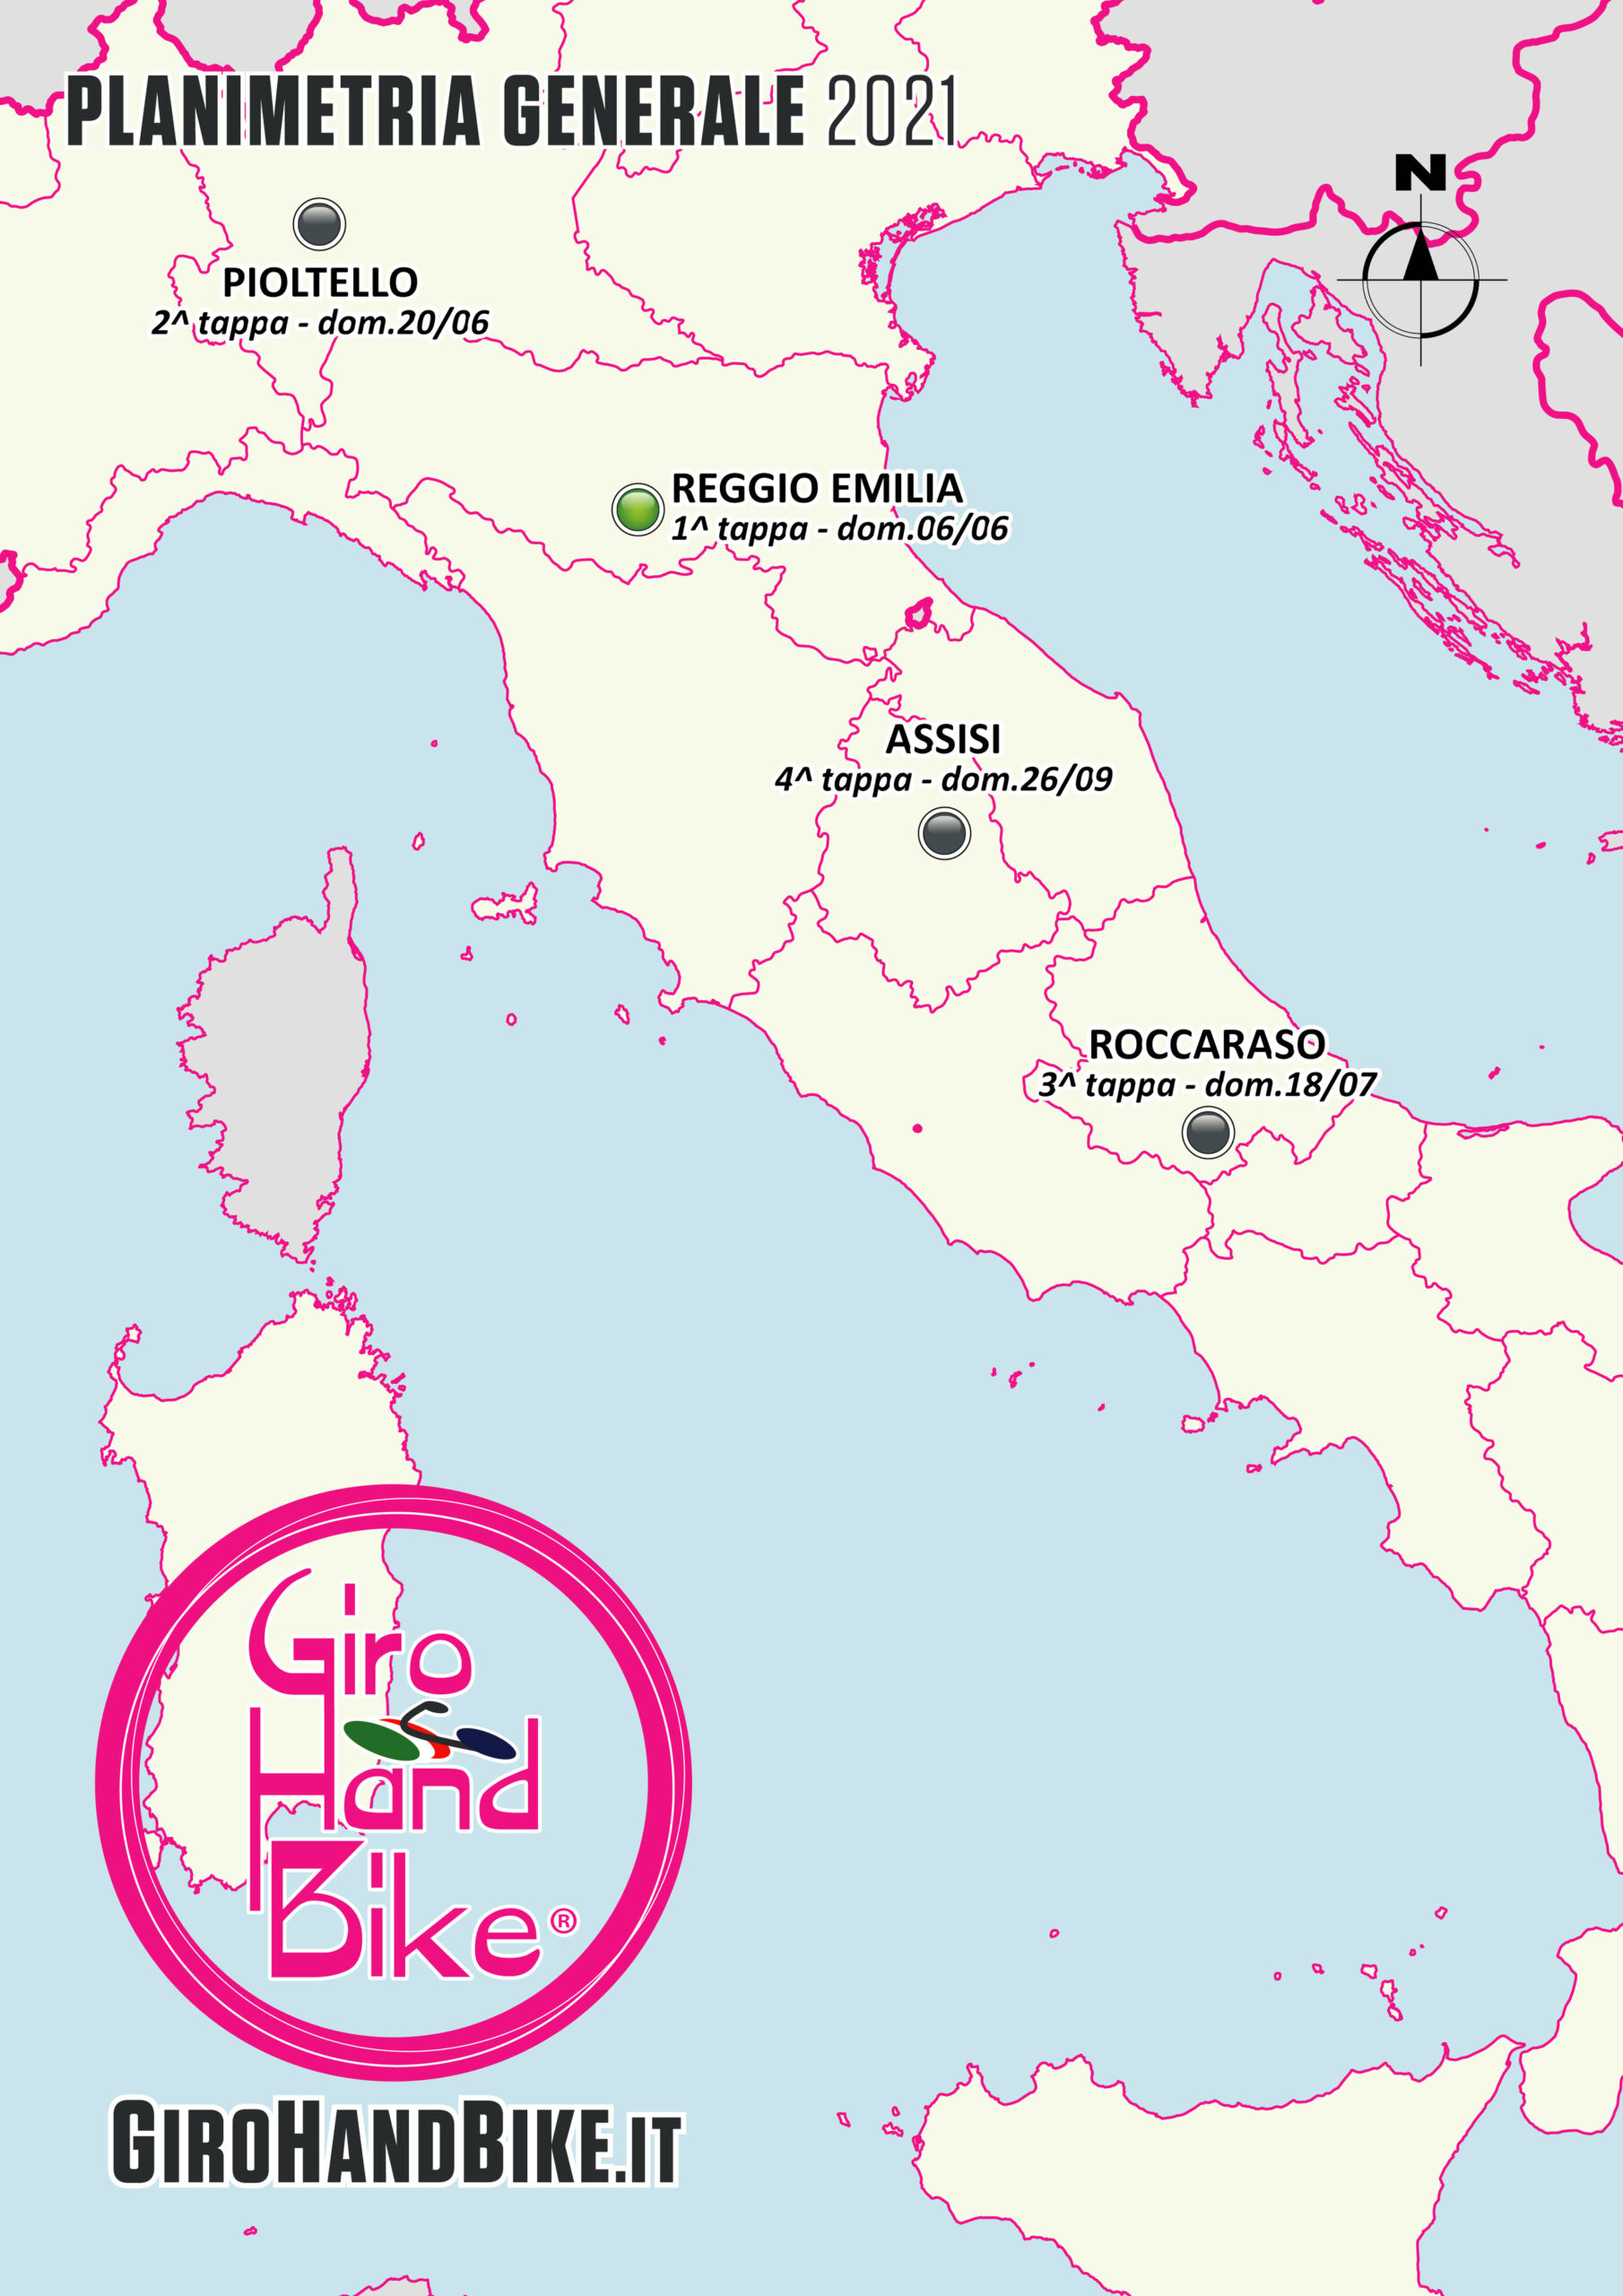 Girohandbike 2021: da Reggio Emilia una grande ripartenza